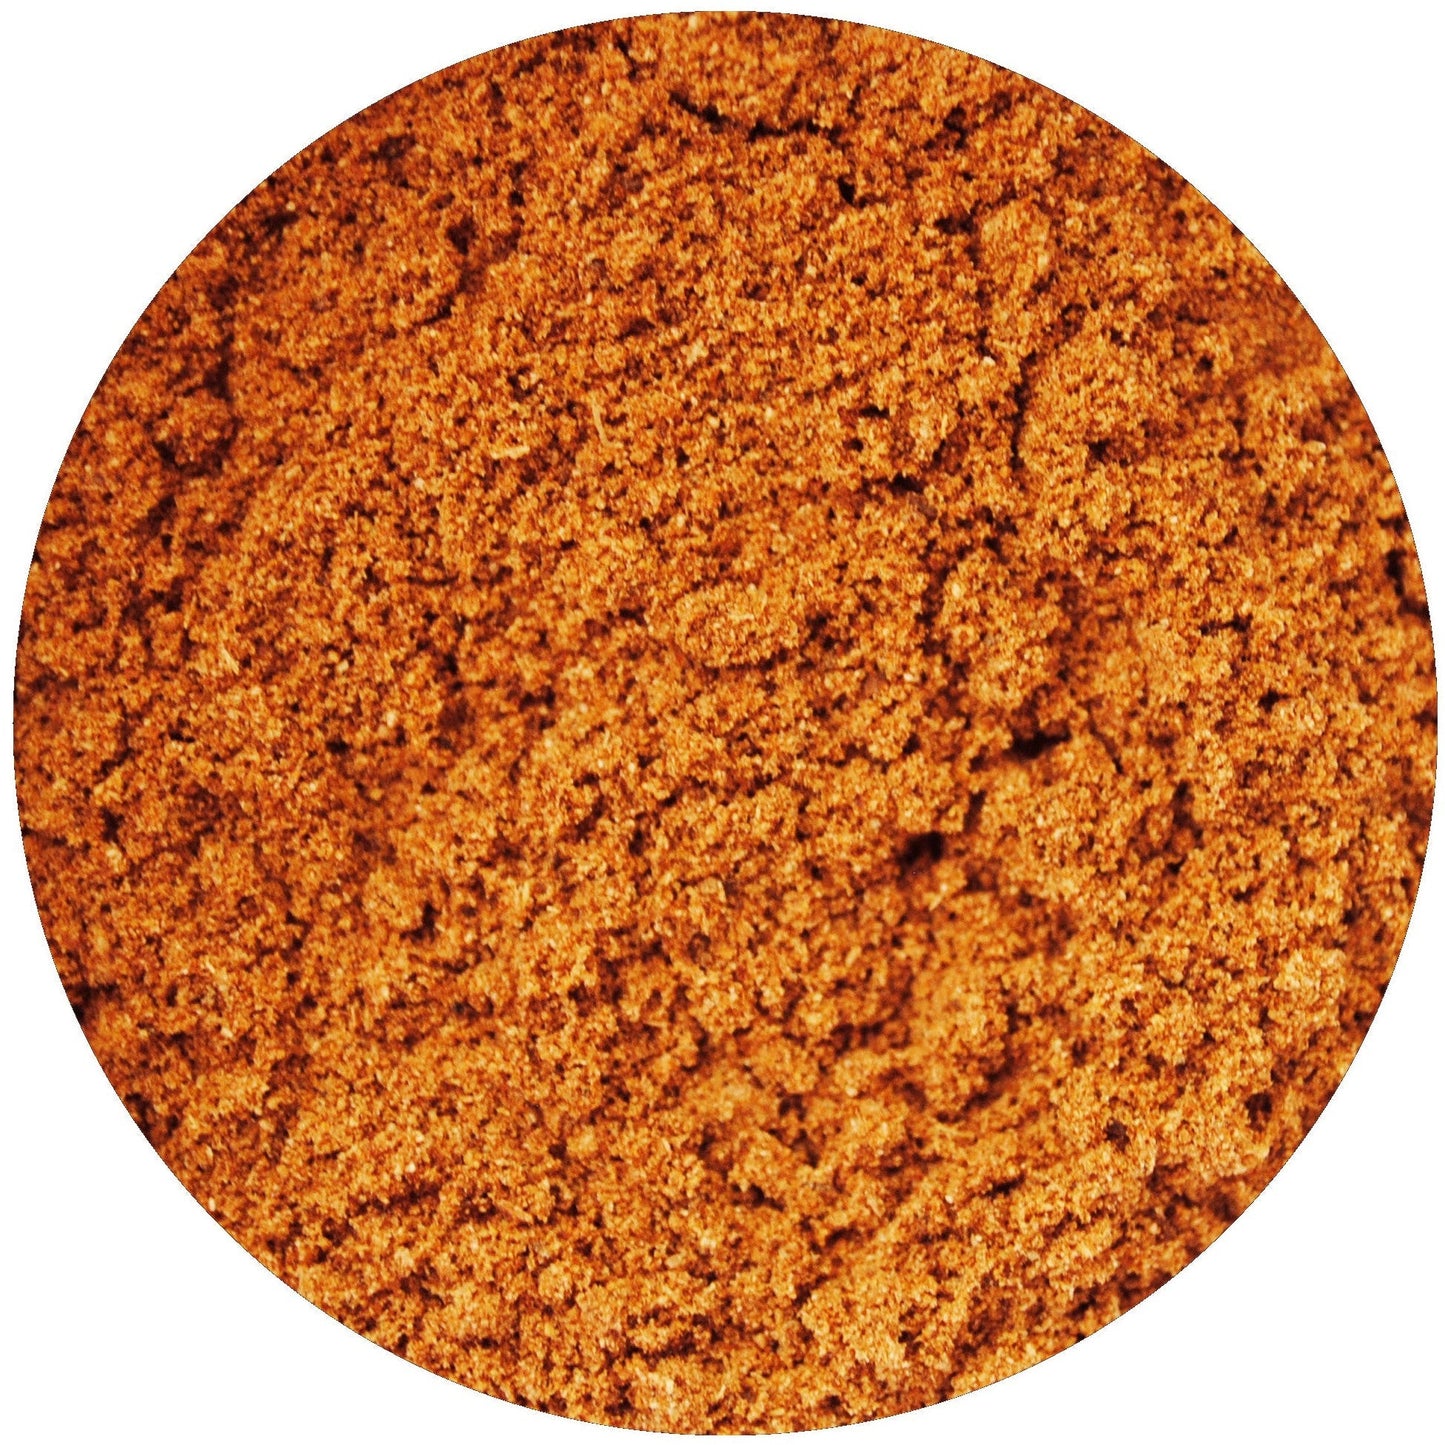 Gingerbread Spice Mix 1.5oz Tin Can - Unique Flavors Seasonings & Spices Unique Flavors LLC 